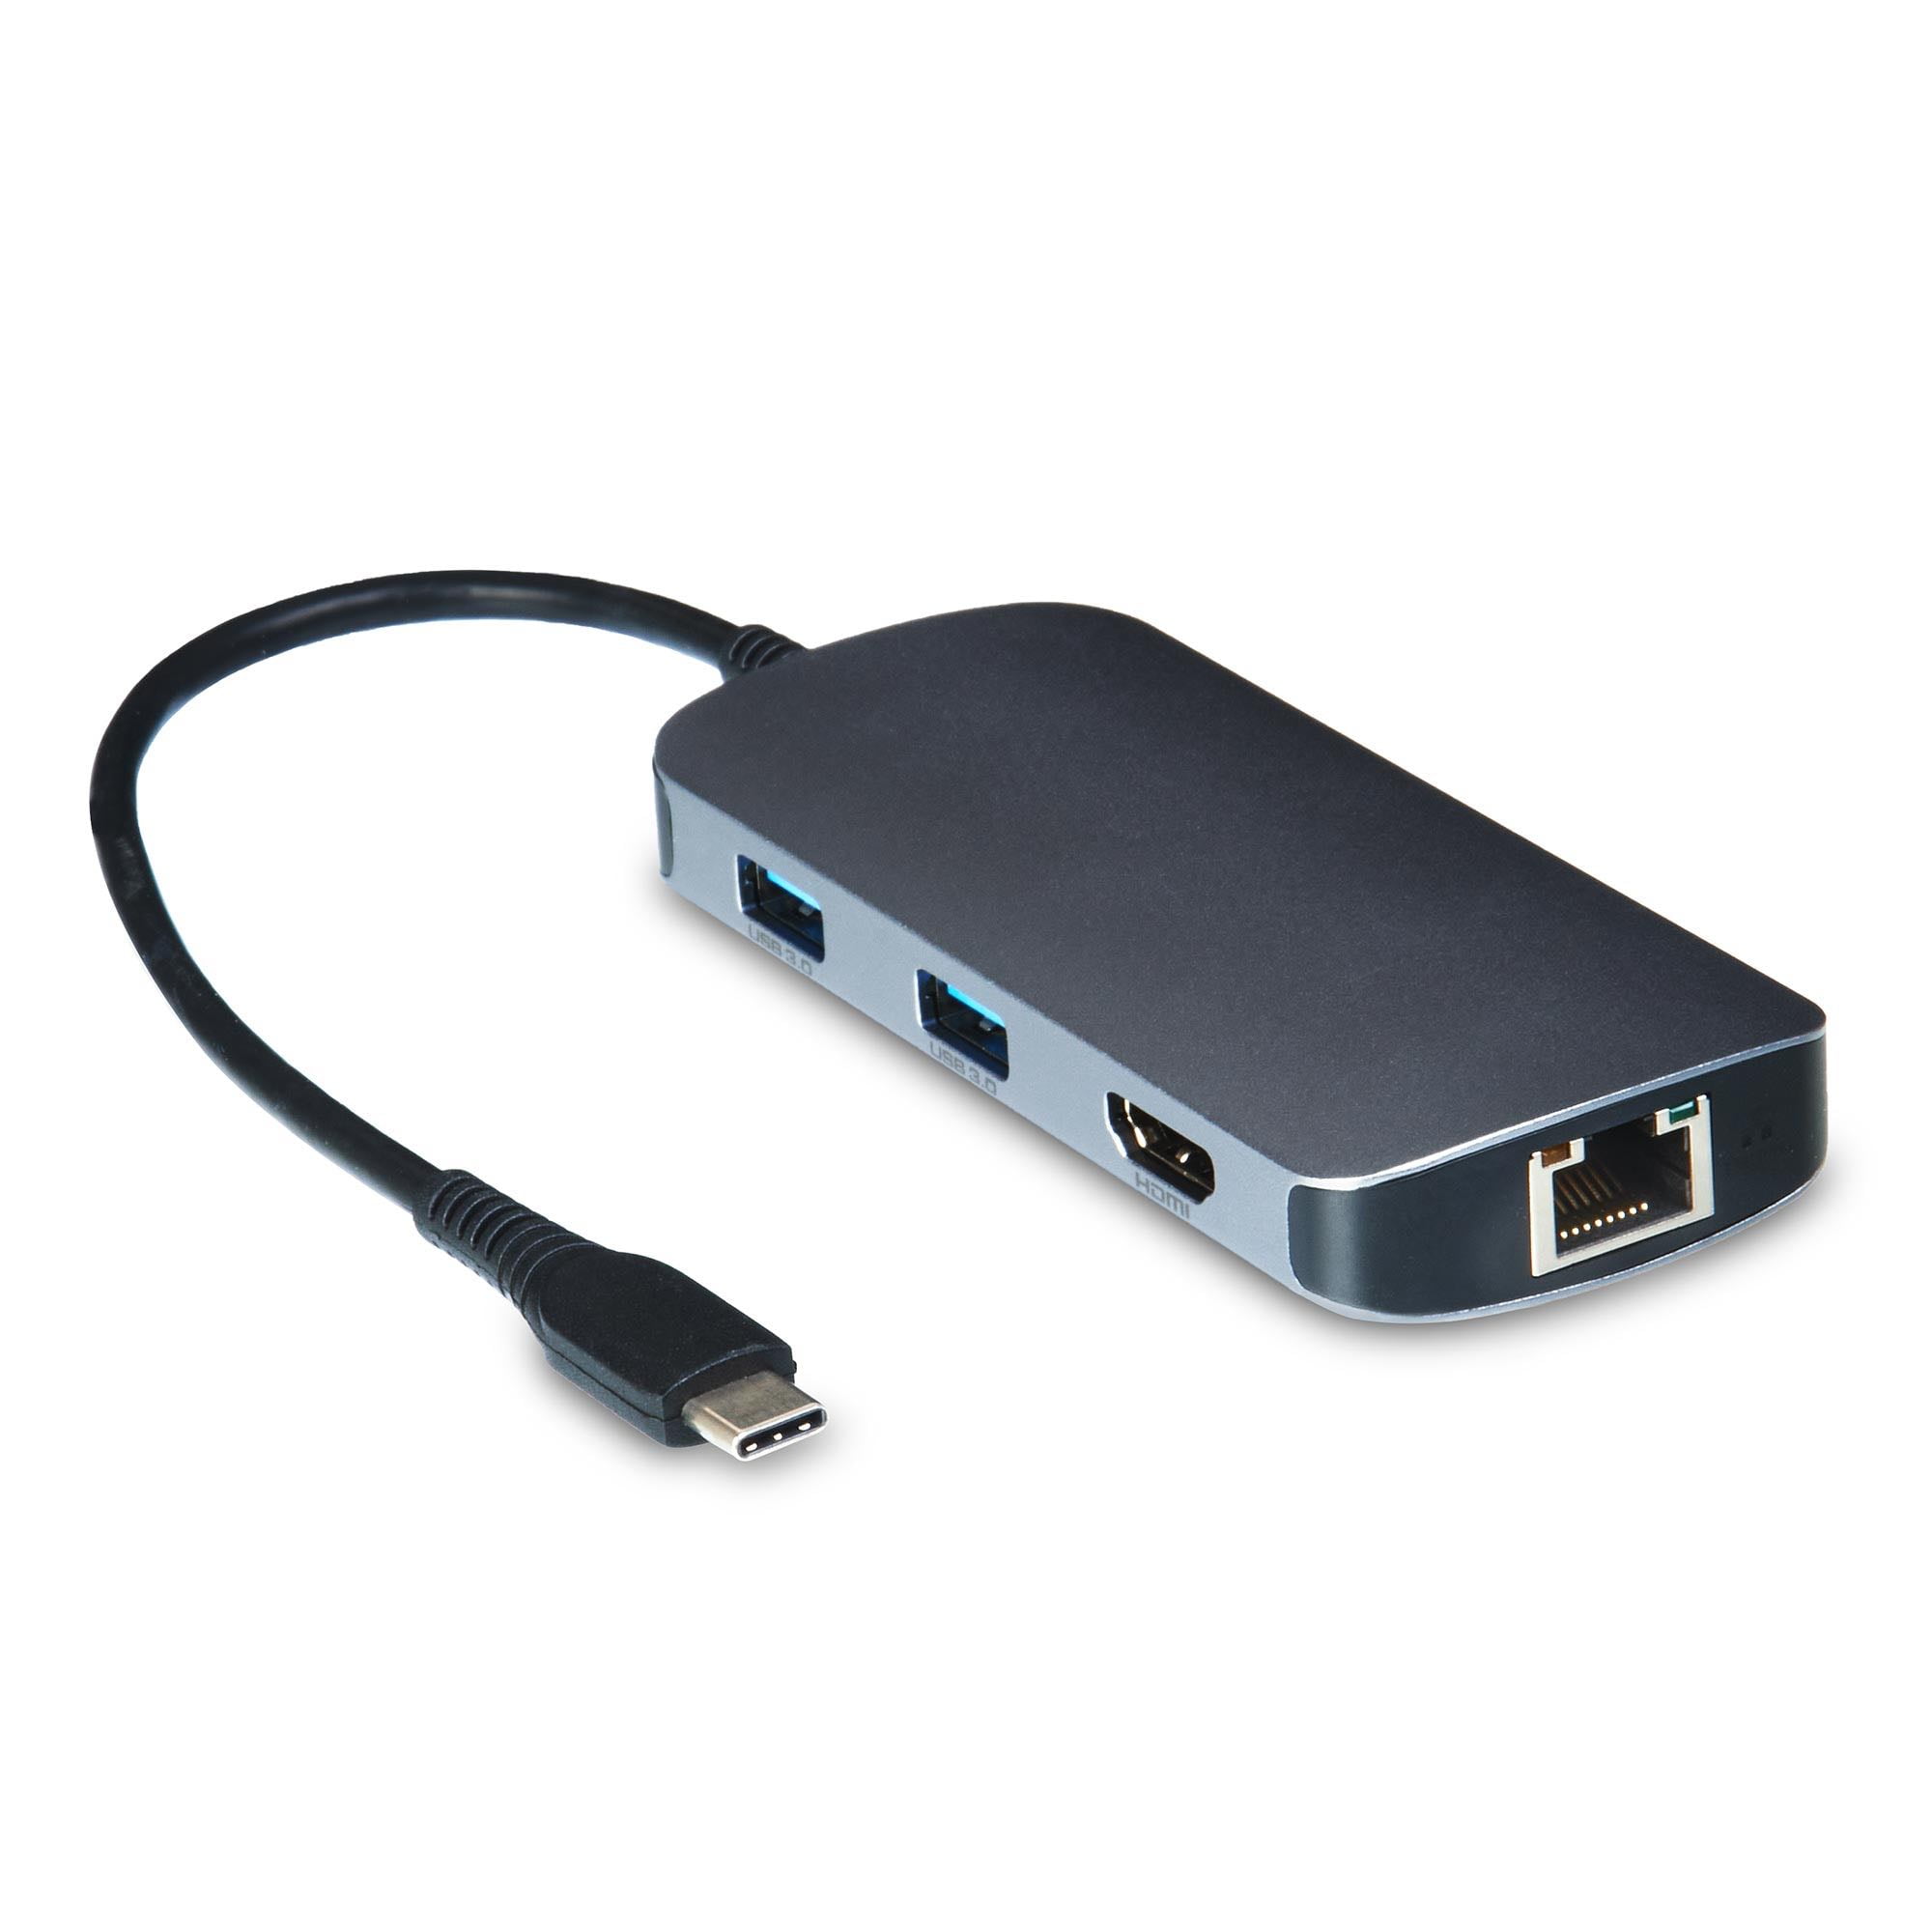 Graan Sinewi kroeg onn. 8-in-1 USB-C Adapter, USB 3.0 and 4K HDMI Compatible - Walmart.com